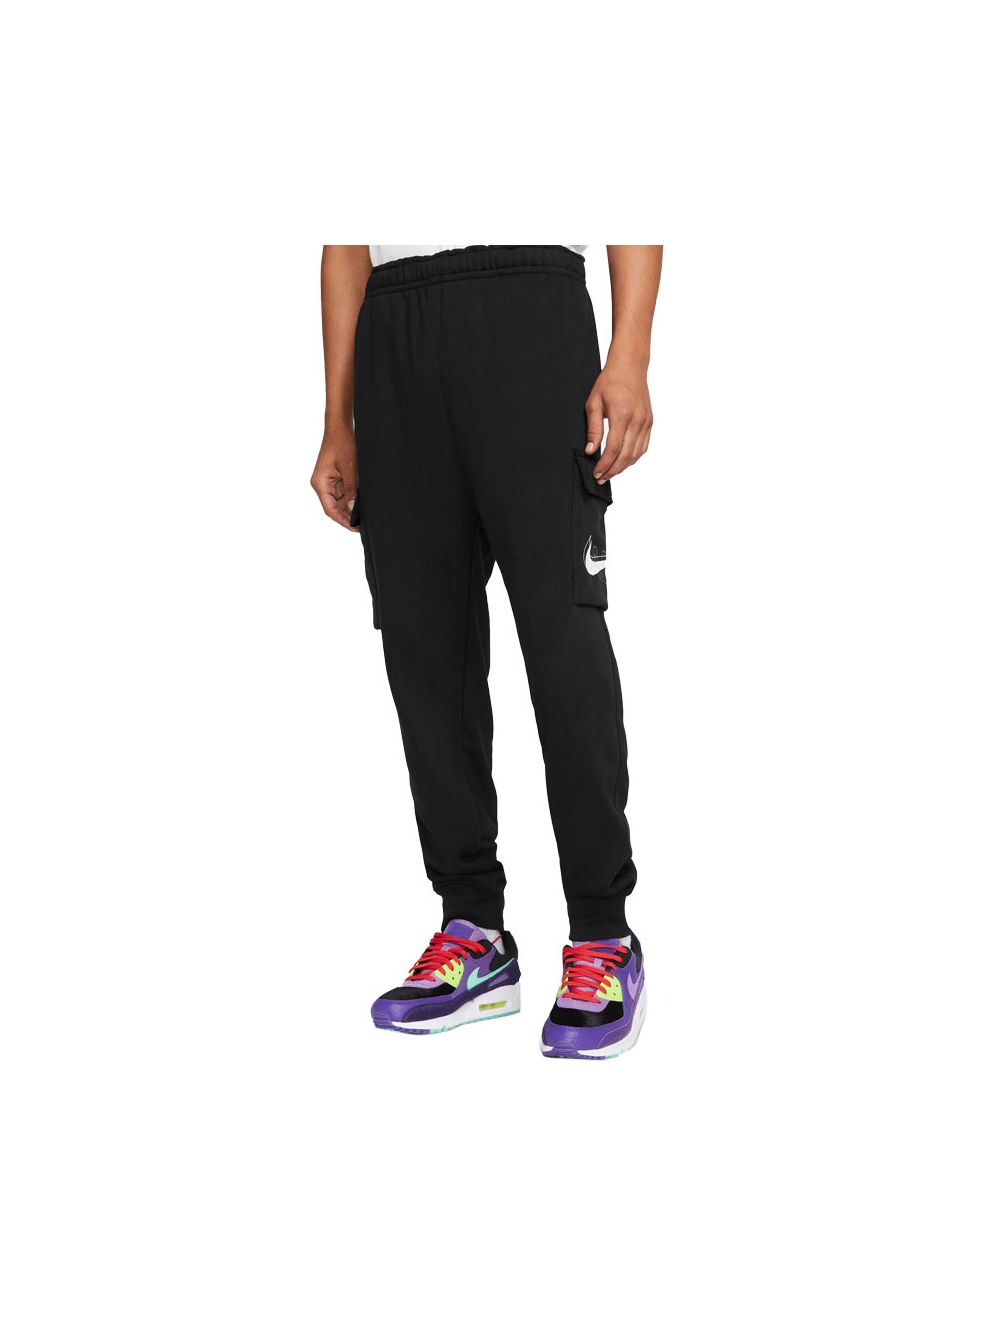 Shop Nike Sportswear Mens Cargo Pants Black/Silver